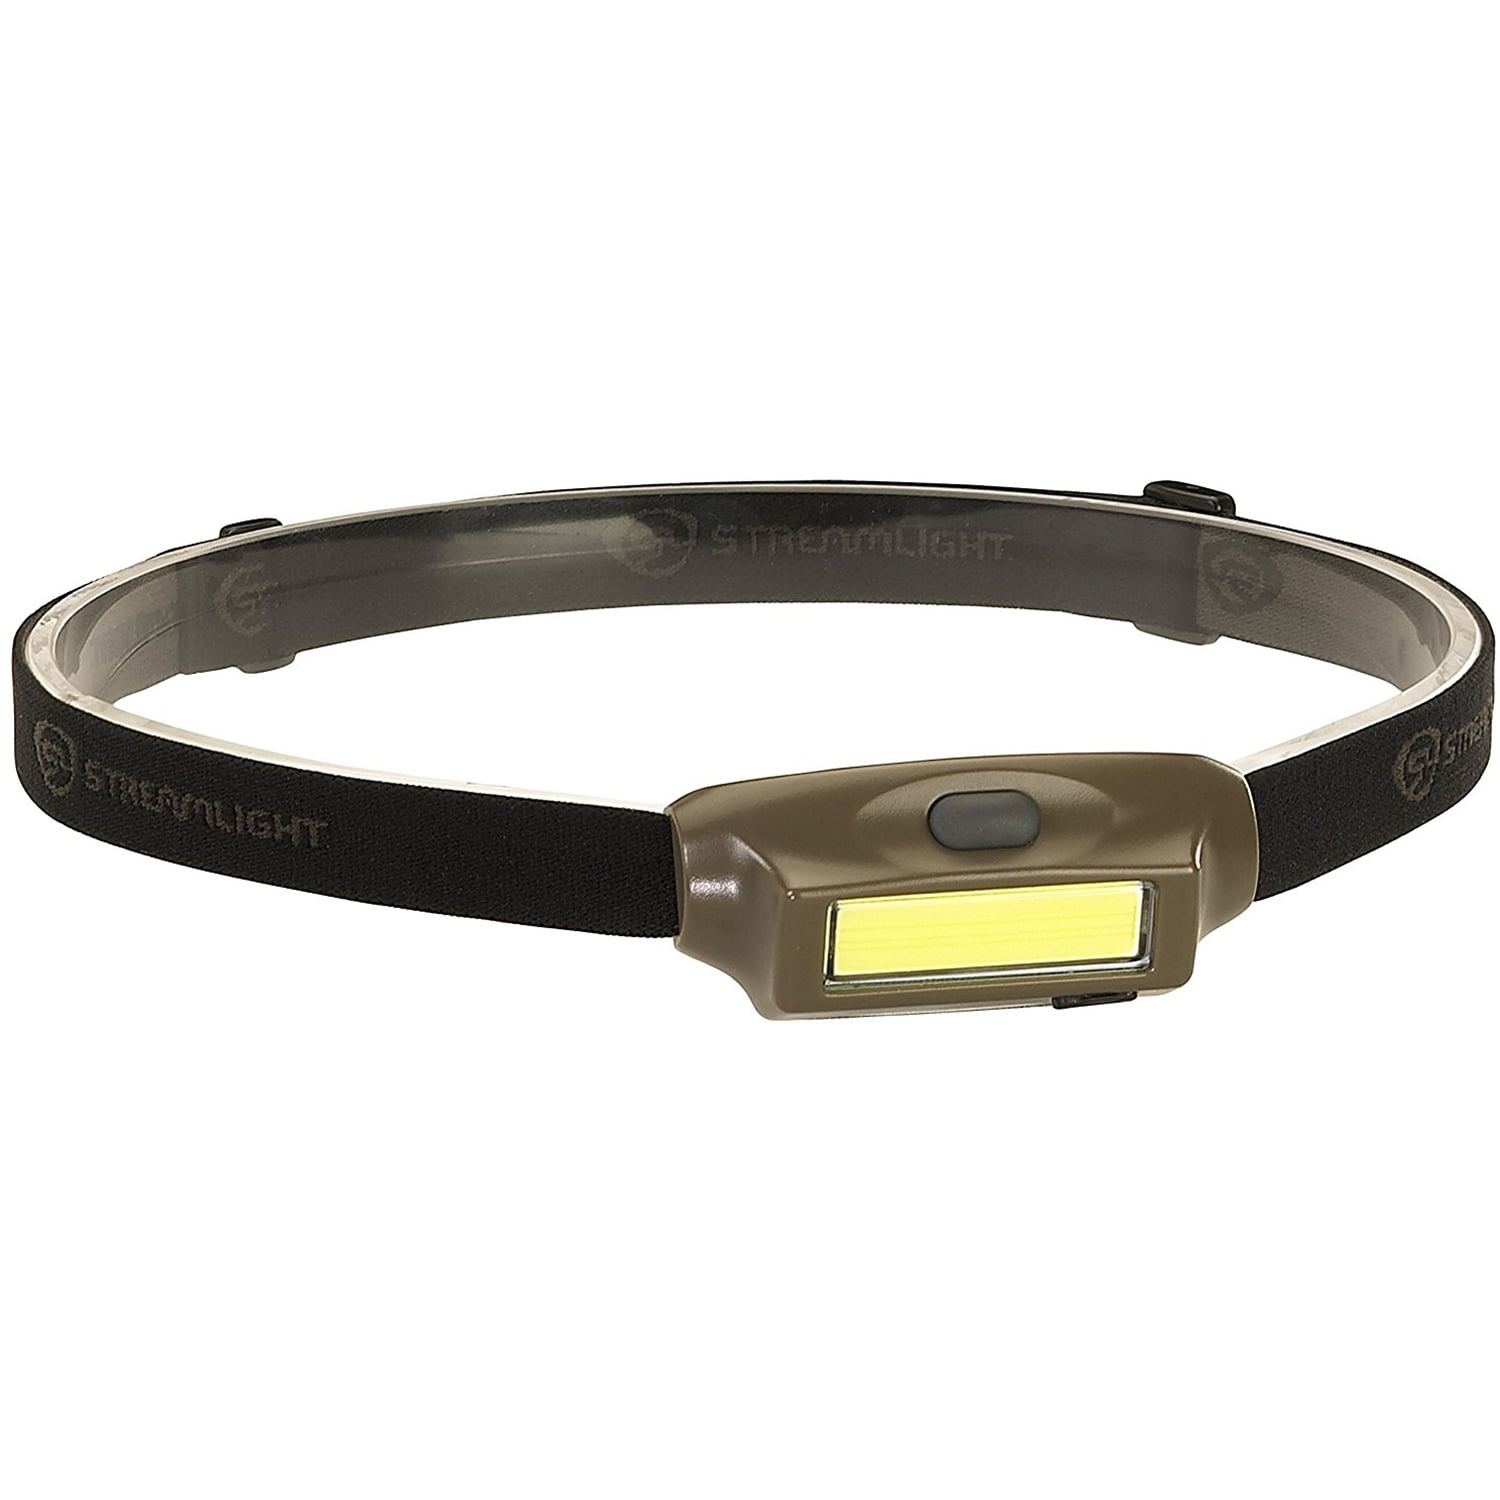 Streamlight 61700 Bandit LED Headlamp 180 Lumens Yellow for sale online